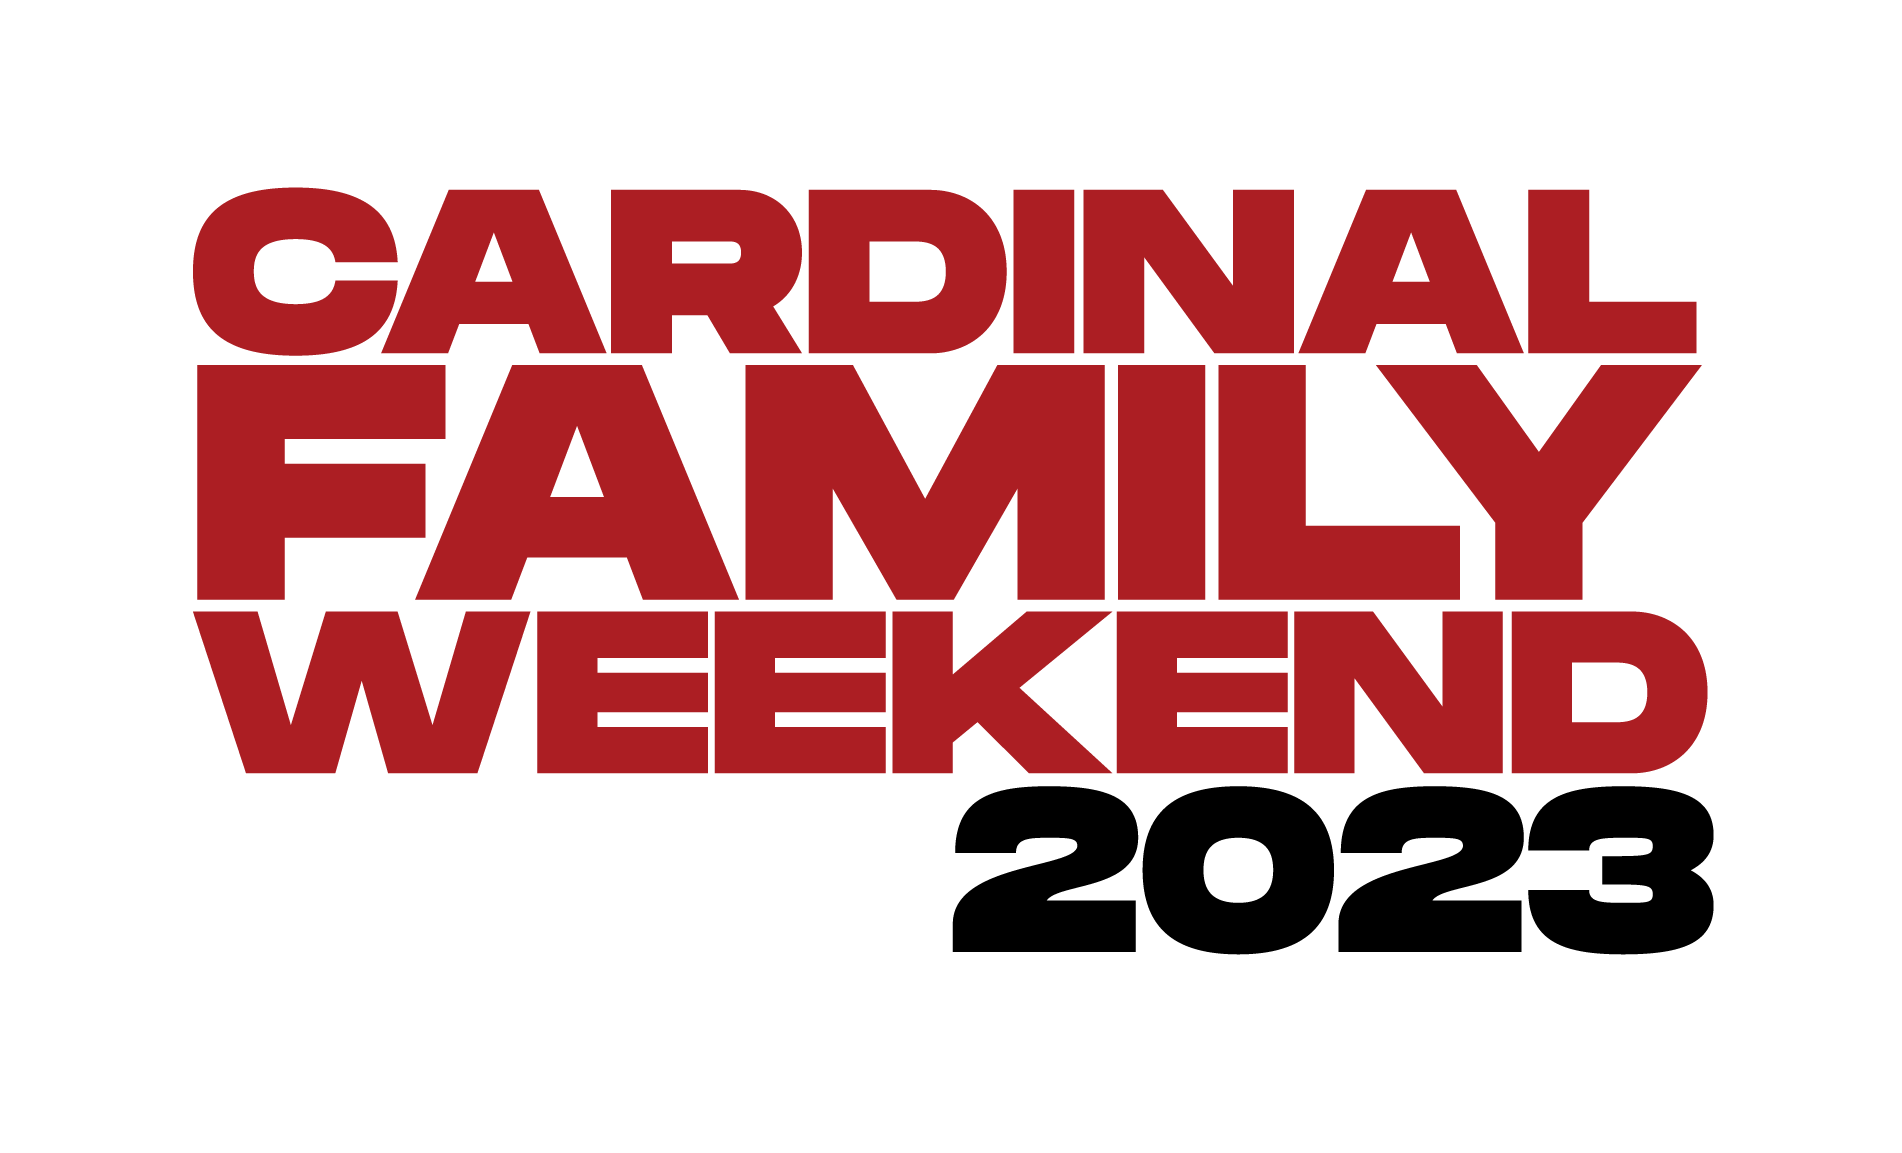 Cardinal Family Weekend 2023. September 22 to 24, 2023.